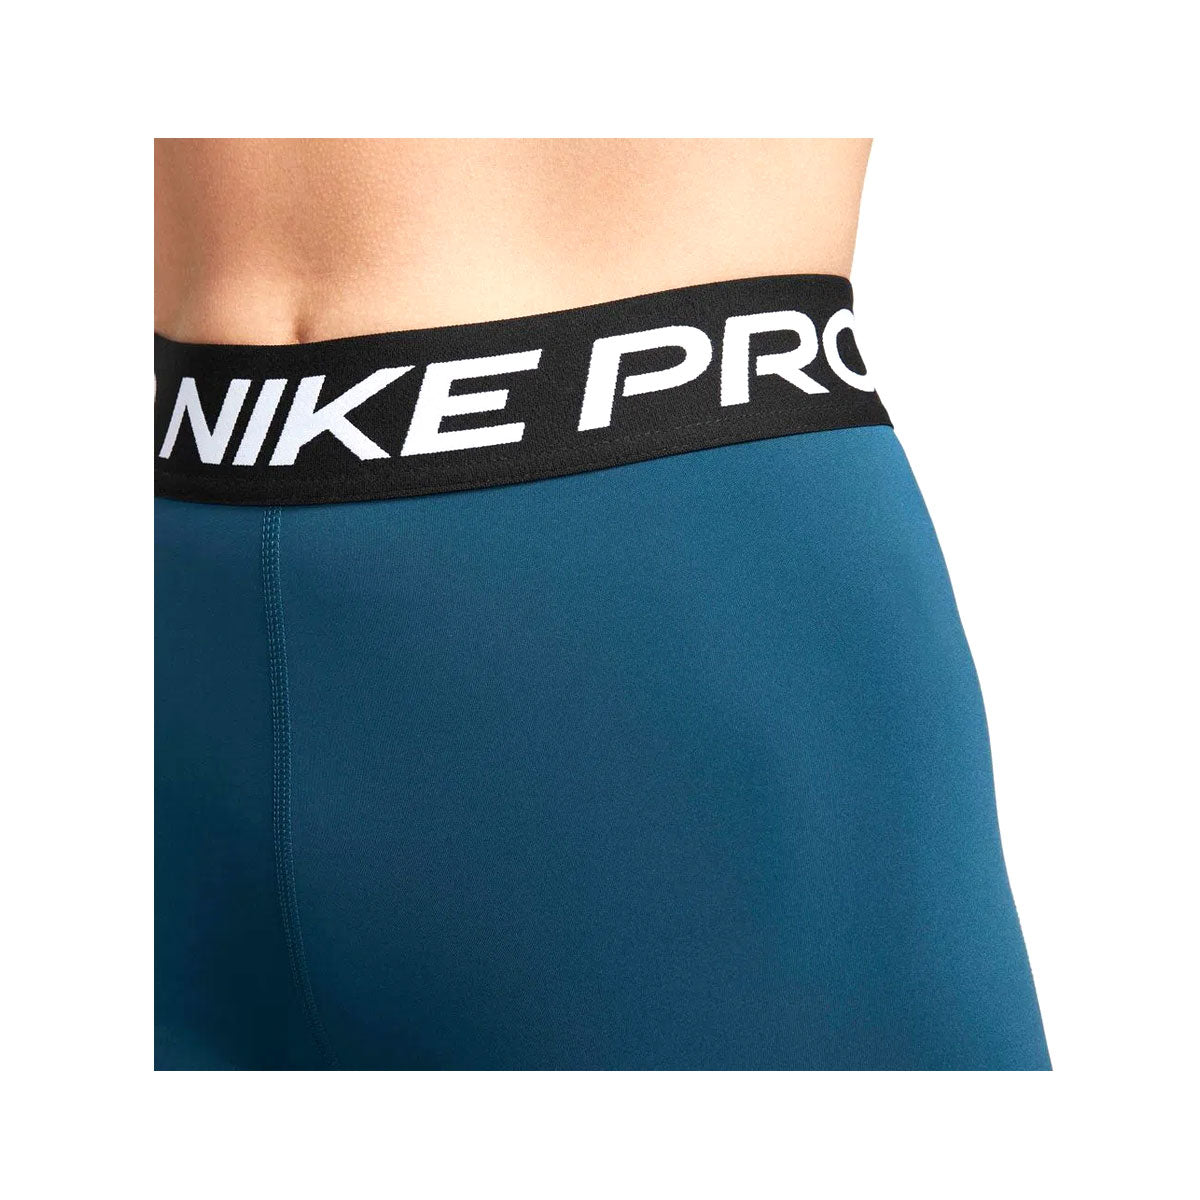 Nike Pro Women's 365 5' Inch Short Tight - KickzStore